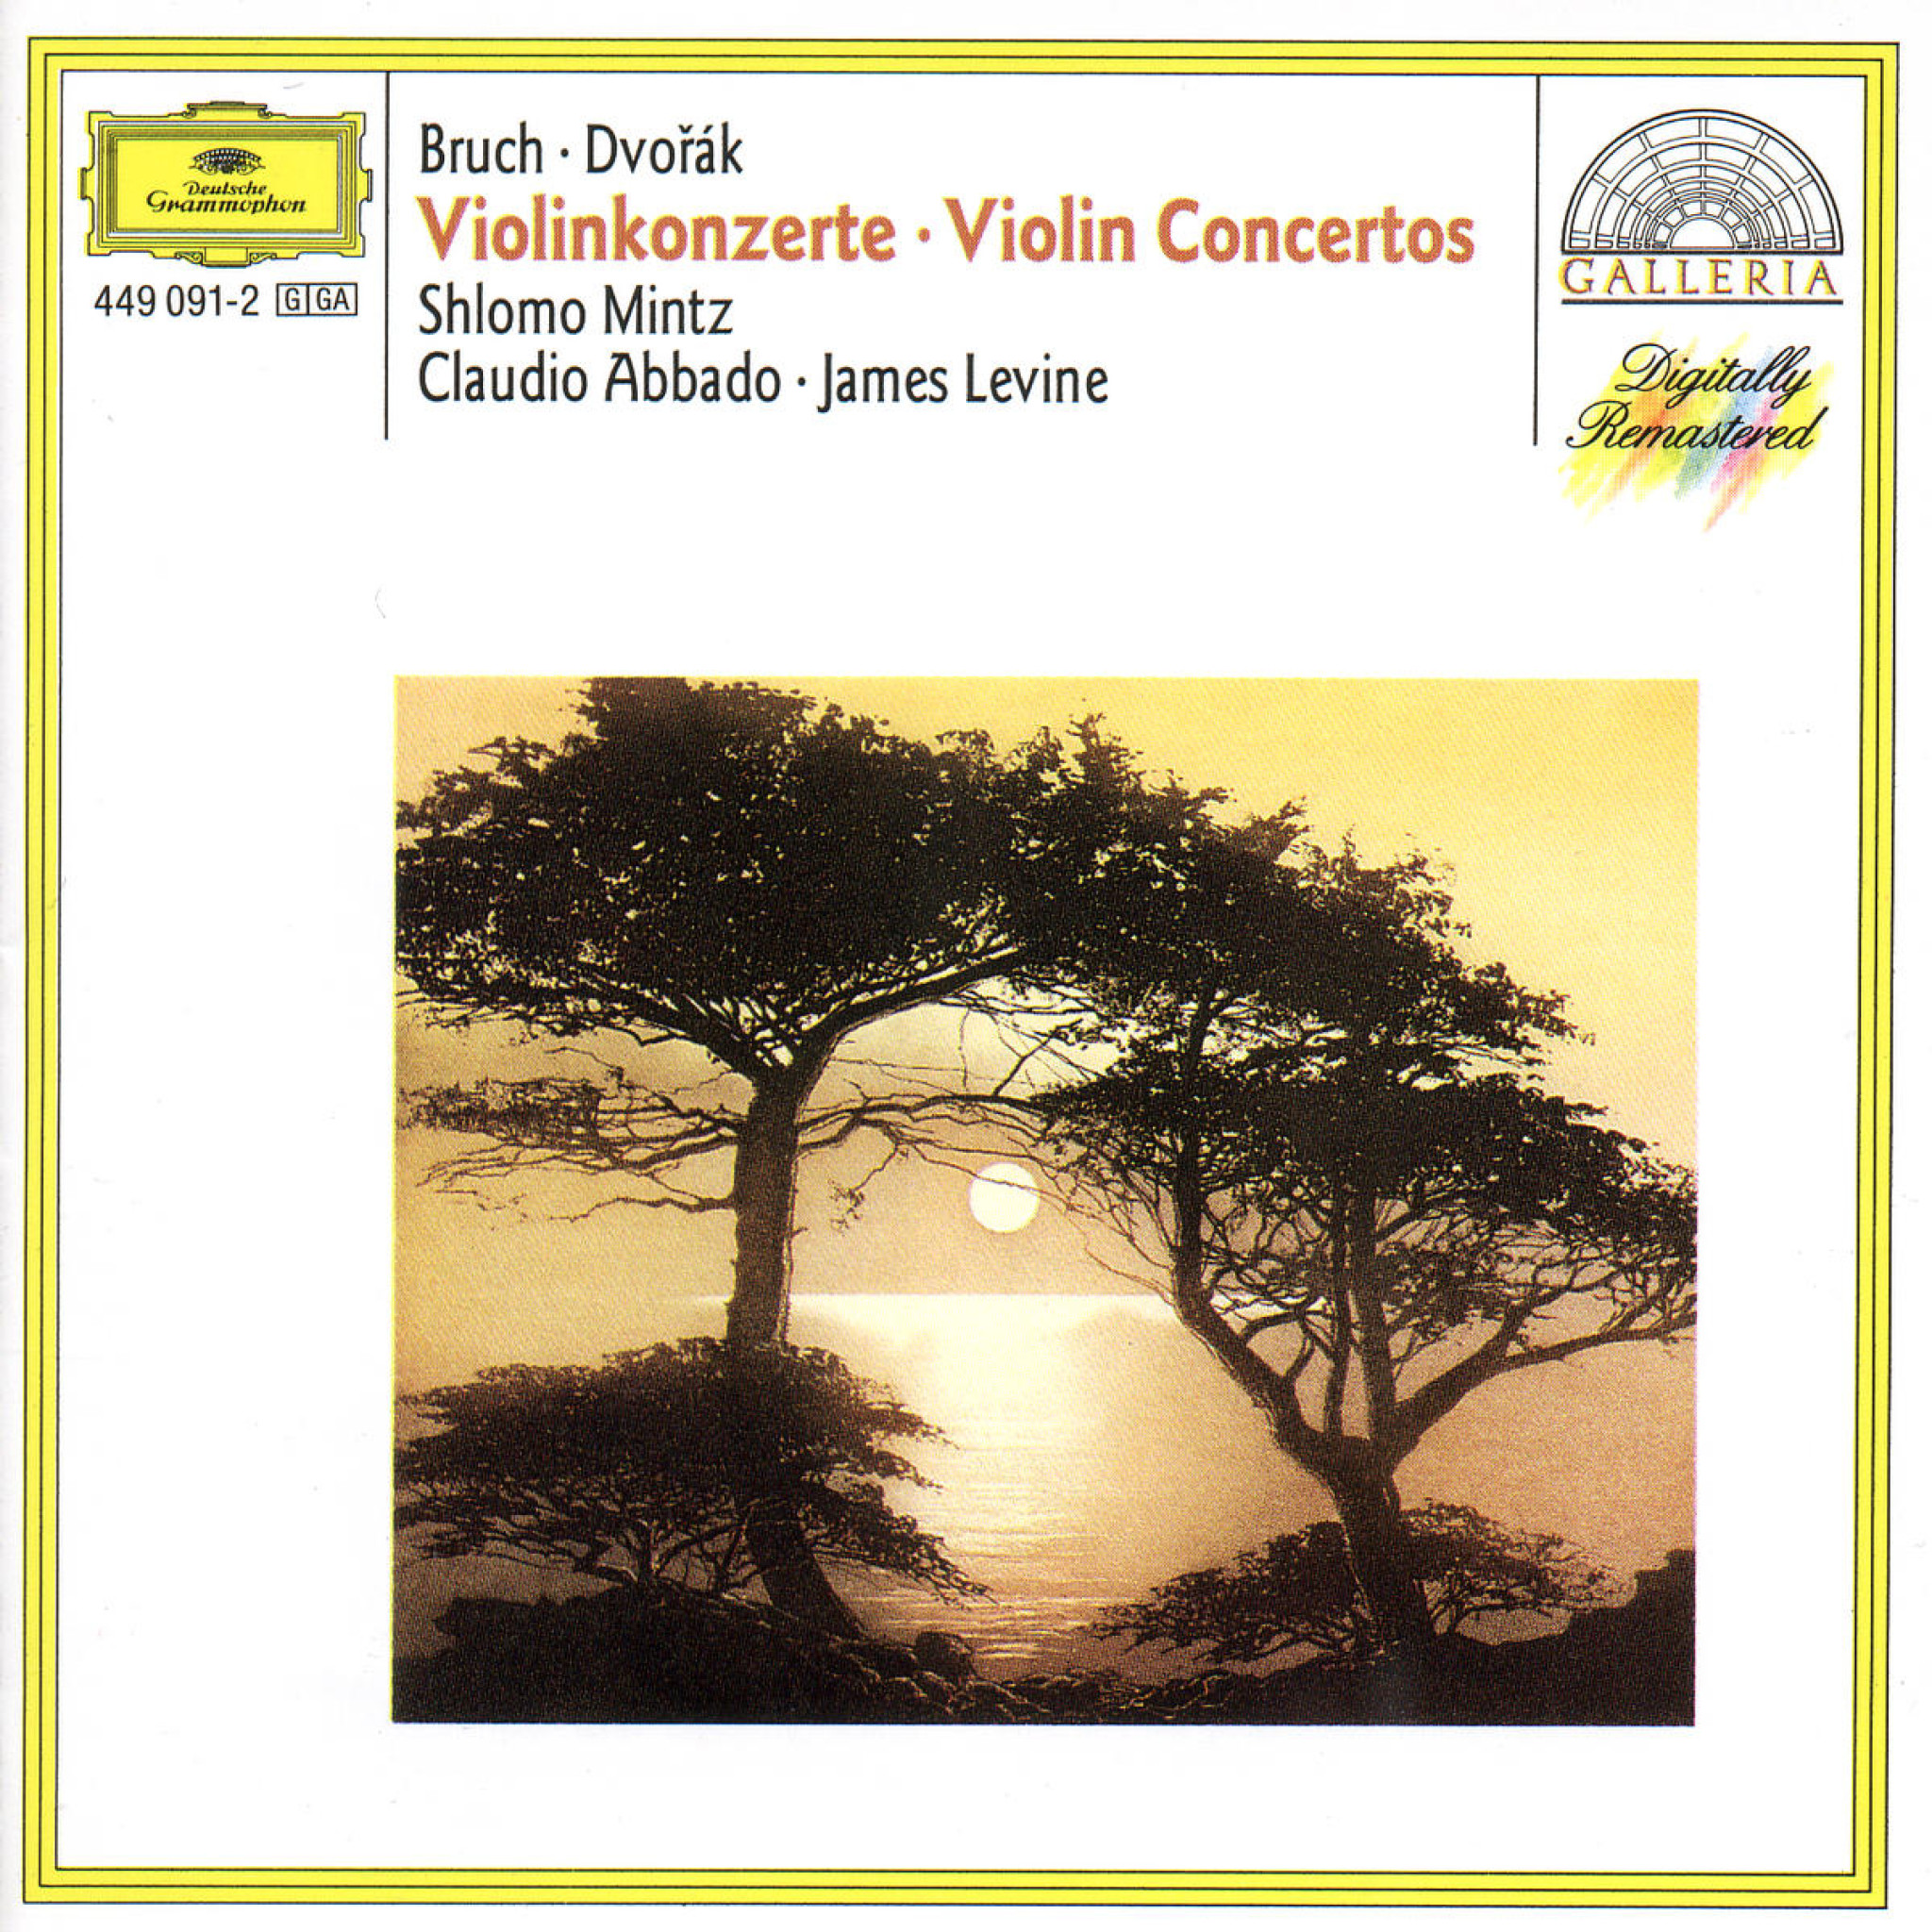 BRUCH, DVOŘÁK Violin Concertos / Shlomo Mintz